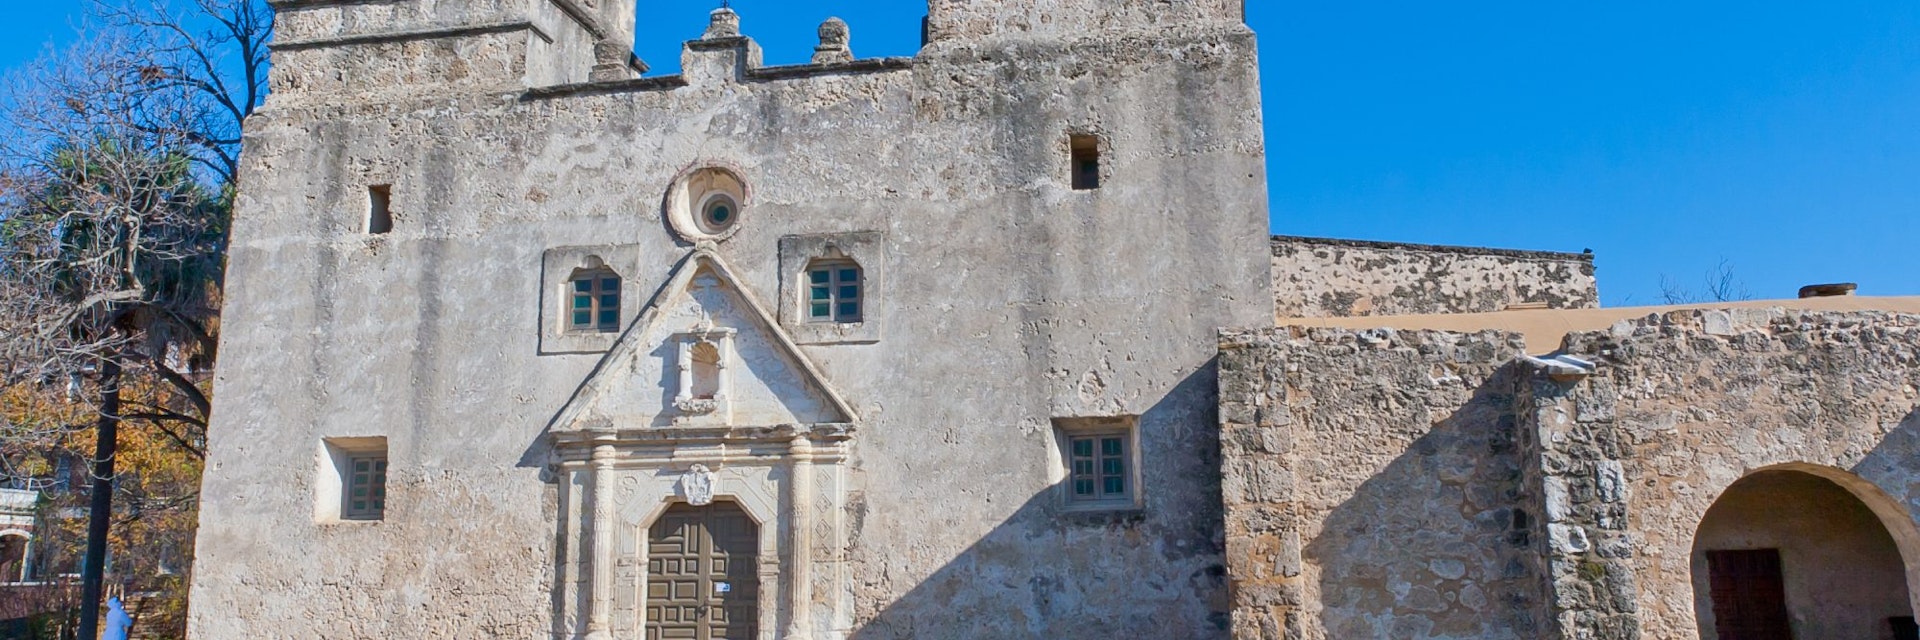 Historic Spanish Mission Concepcion in San Antonio, Texas